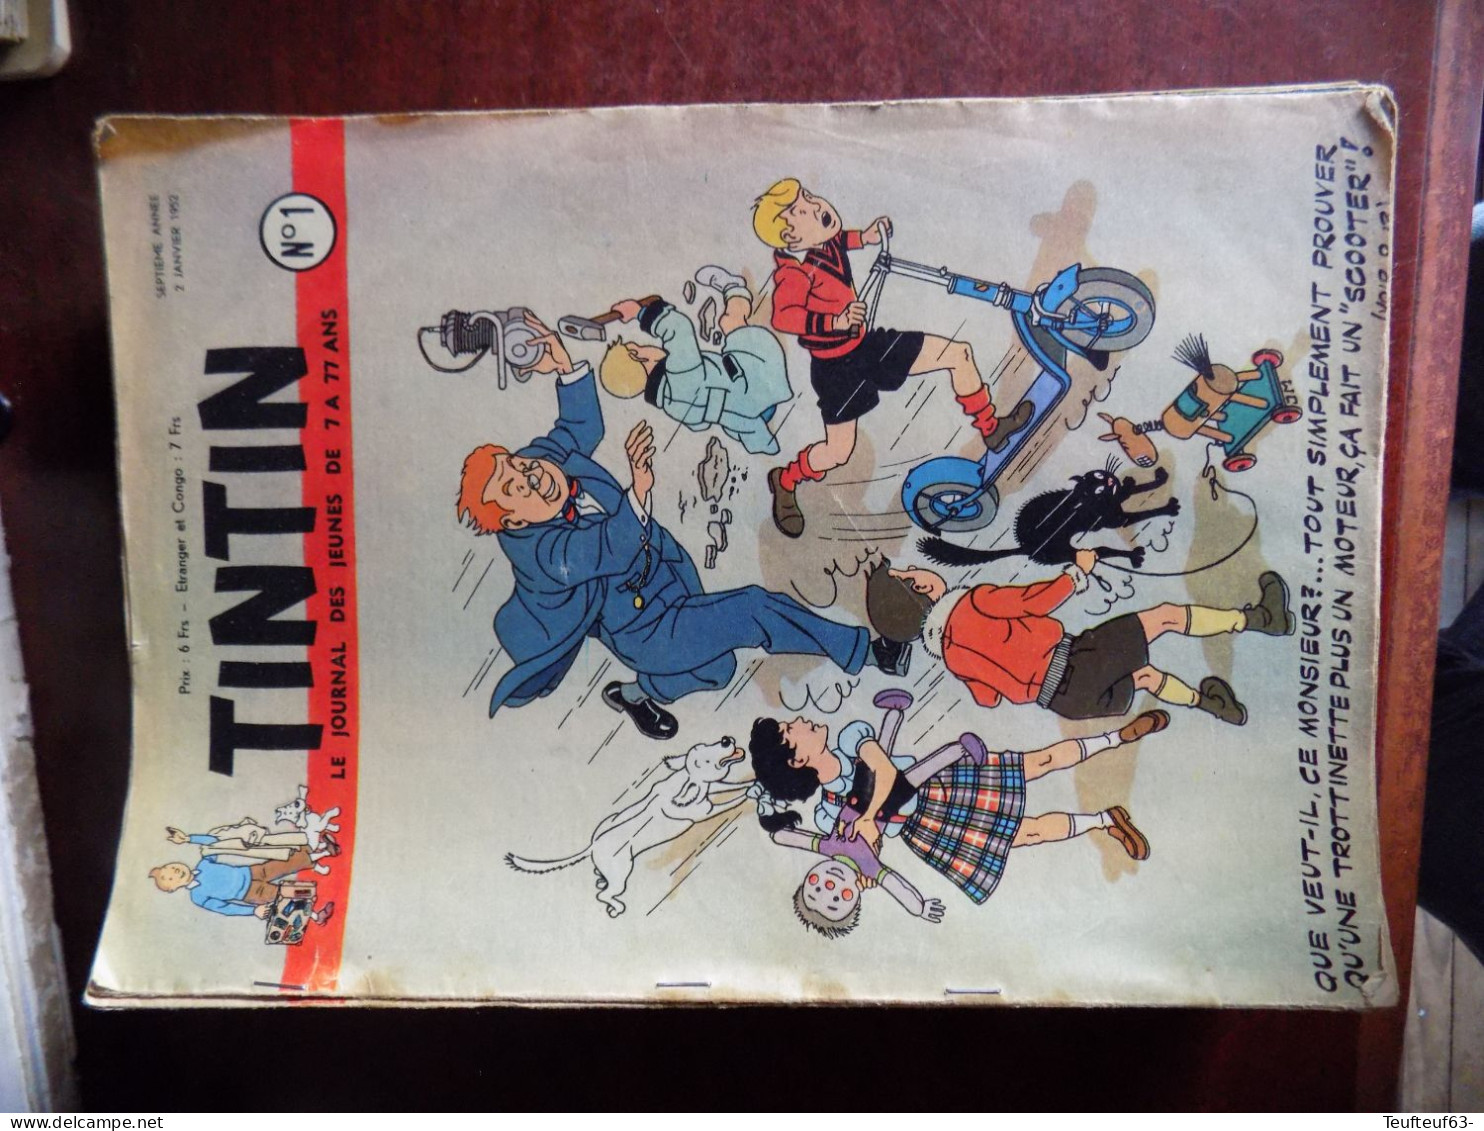 Tintin Année 1952 Complète ( Couverture Hergé , Vandersteen ) - - Tintin